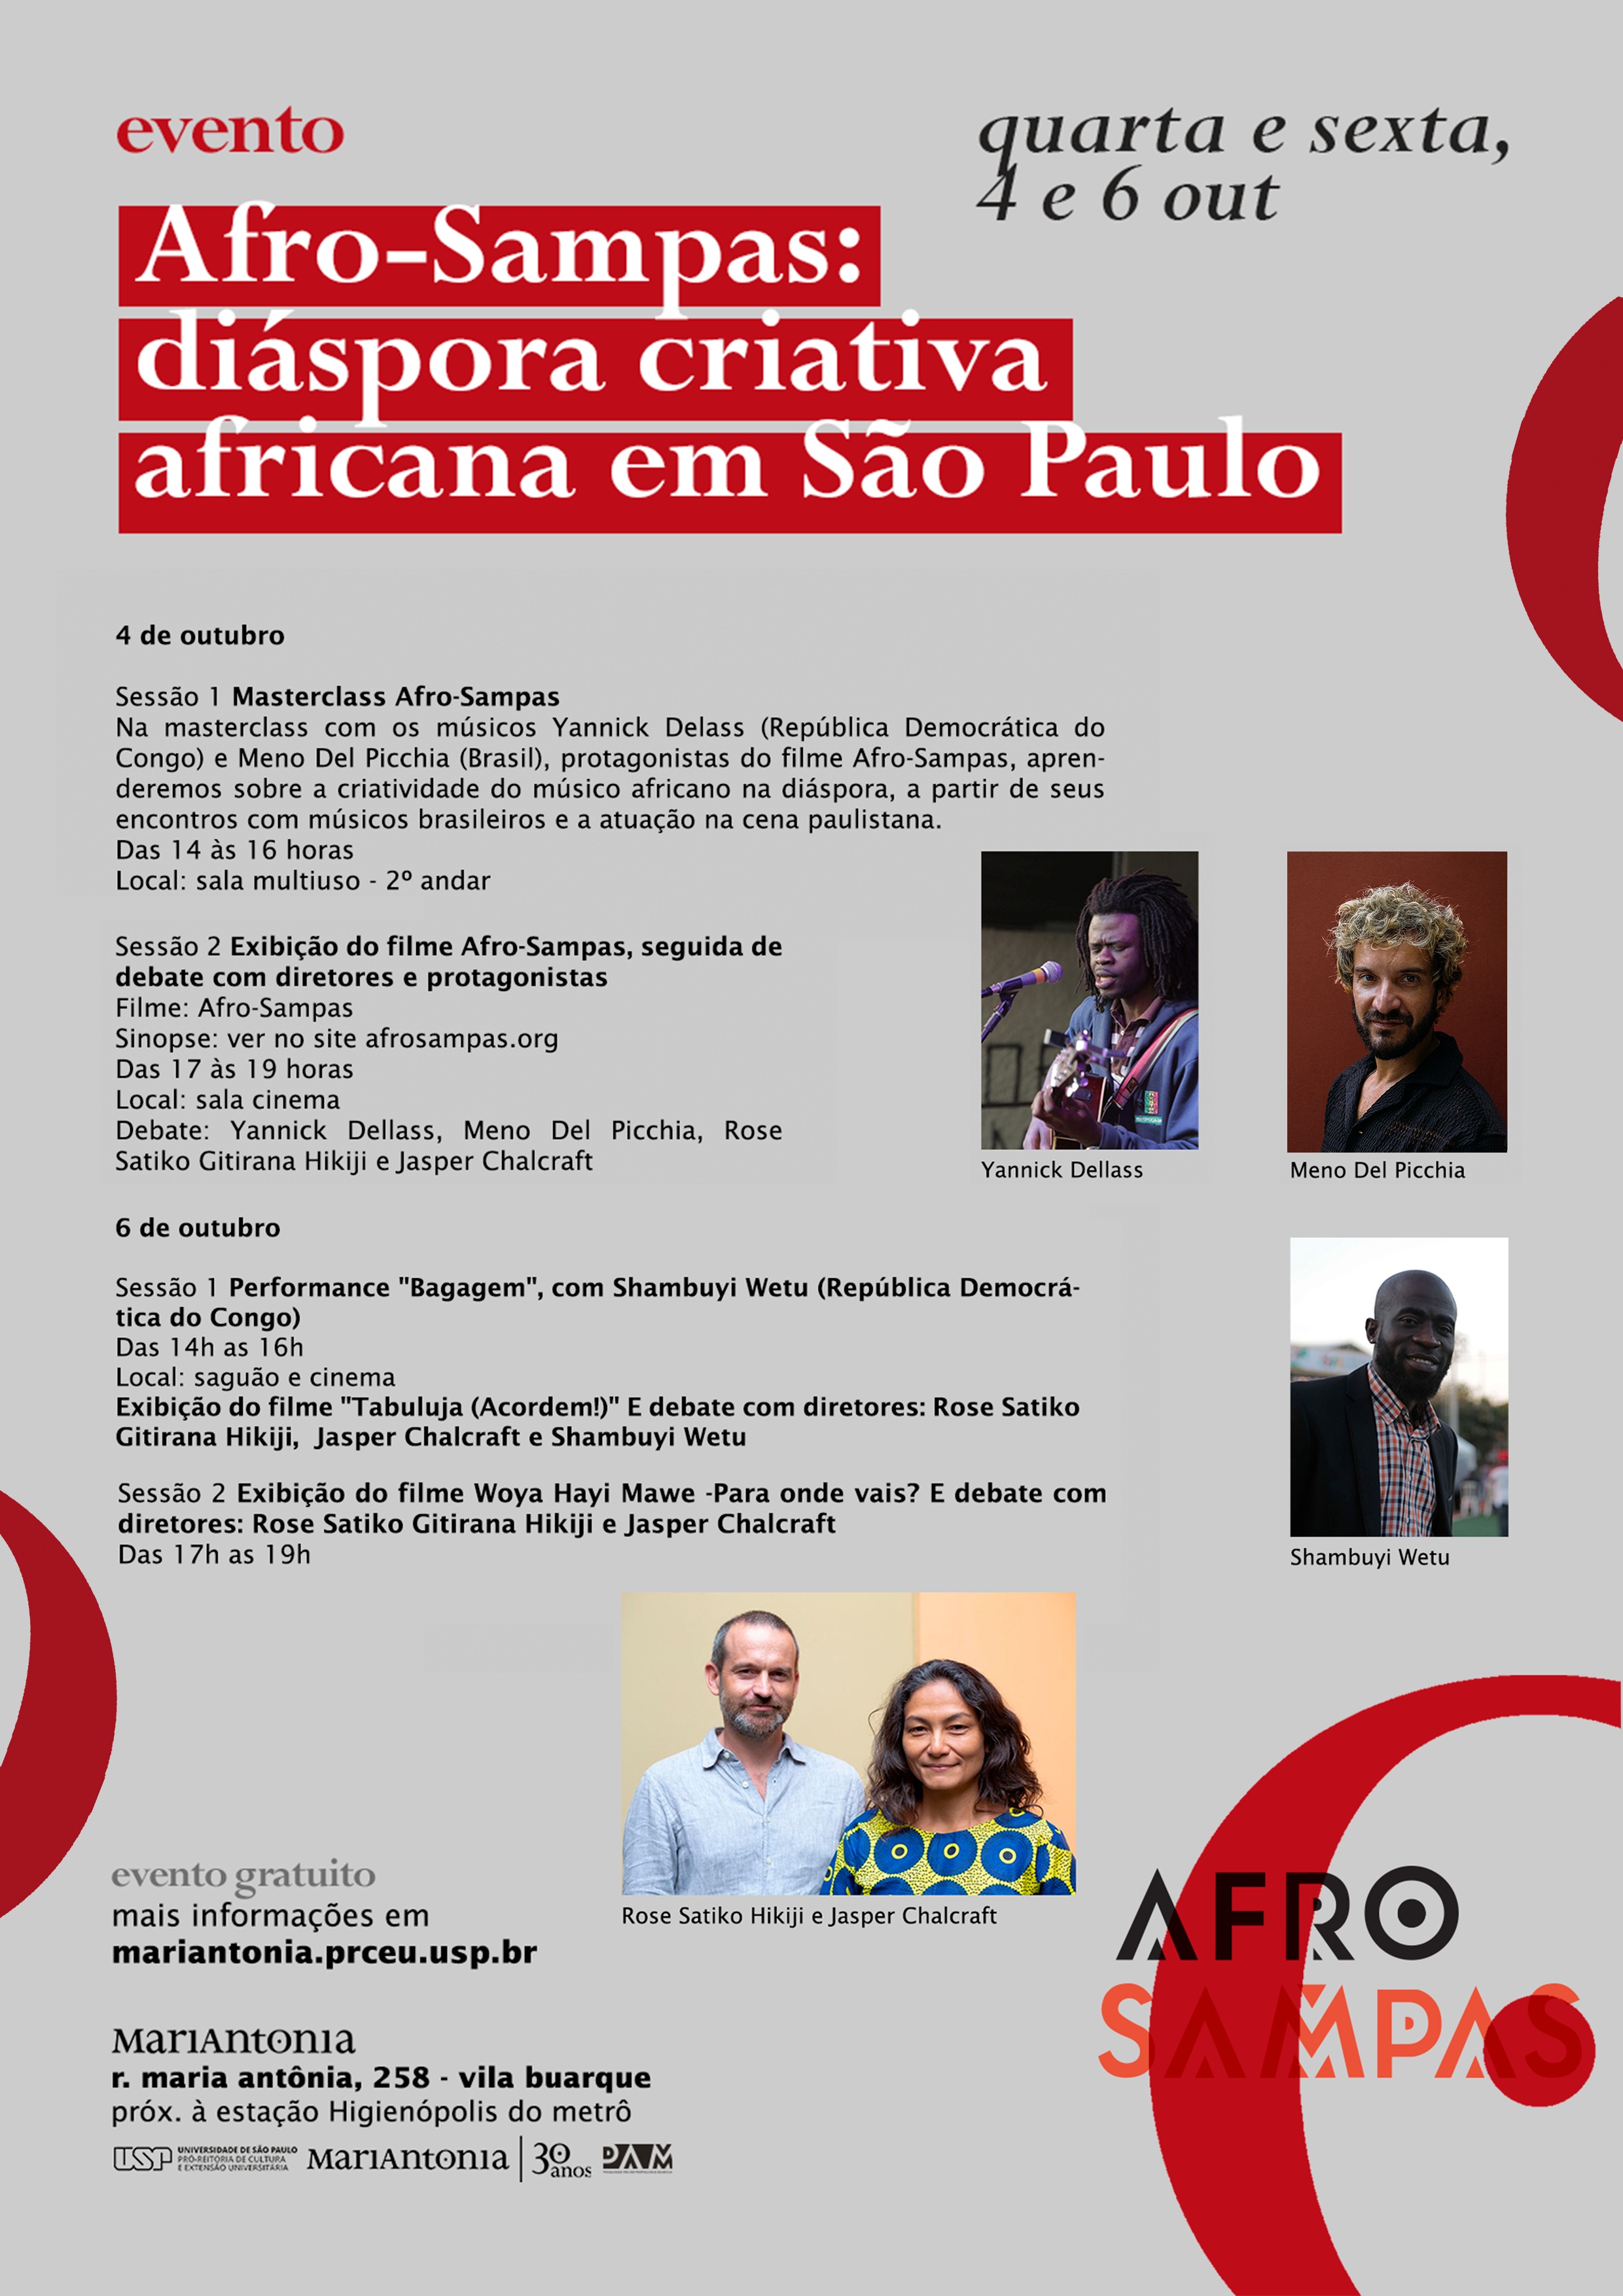 [Day 2] Afro-sampas: African creative diaspora in São Paulo